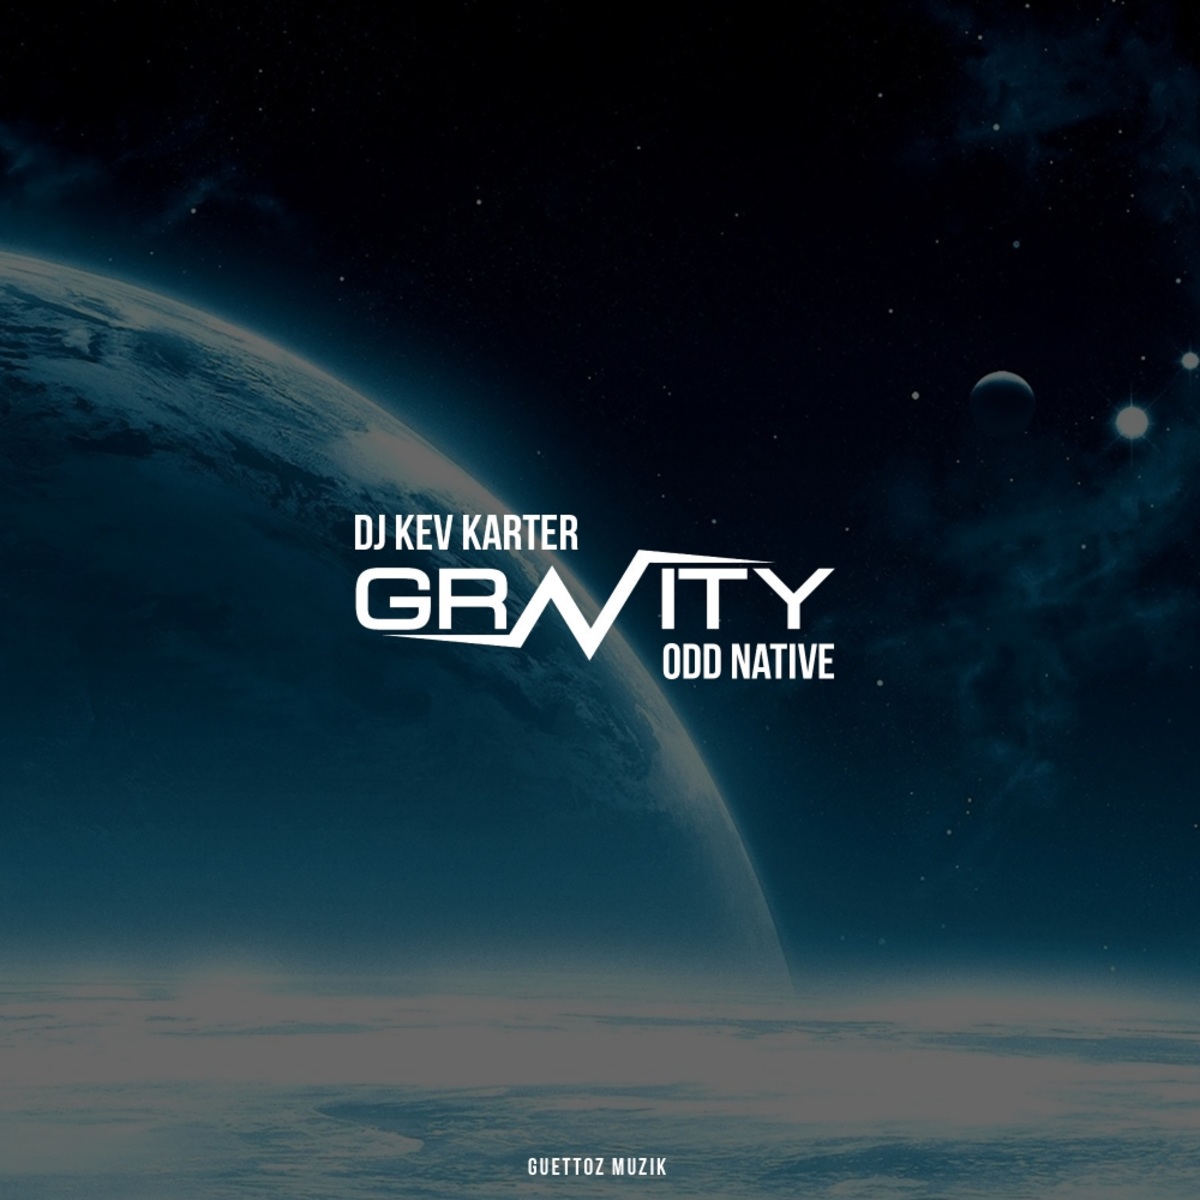 DJ Kev Karter & Odd Native - Gravity (Main Ancestral Mix) / Guettoz Muzik